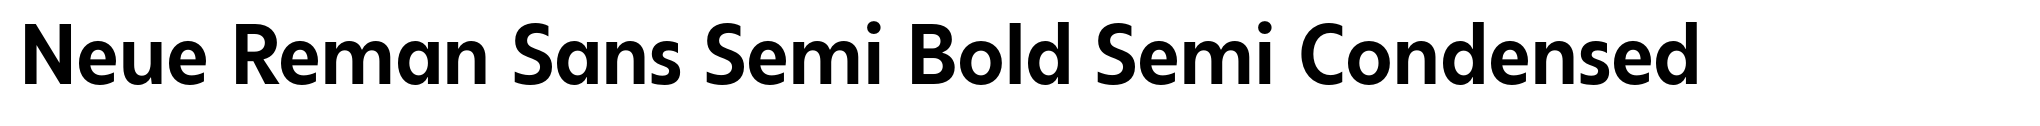 Neue Reman Sans Semi Bold Semi Condensed image